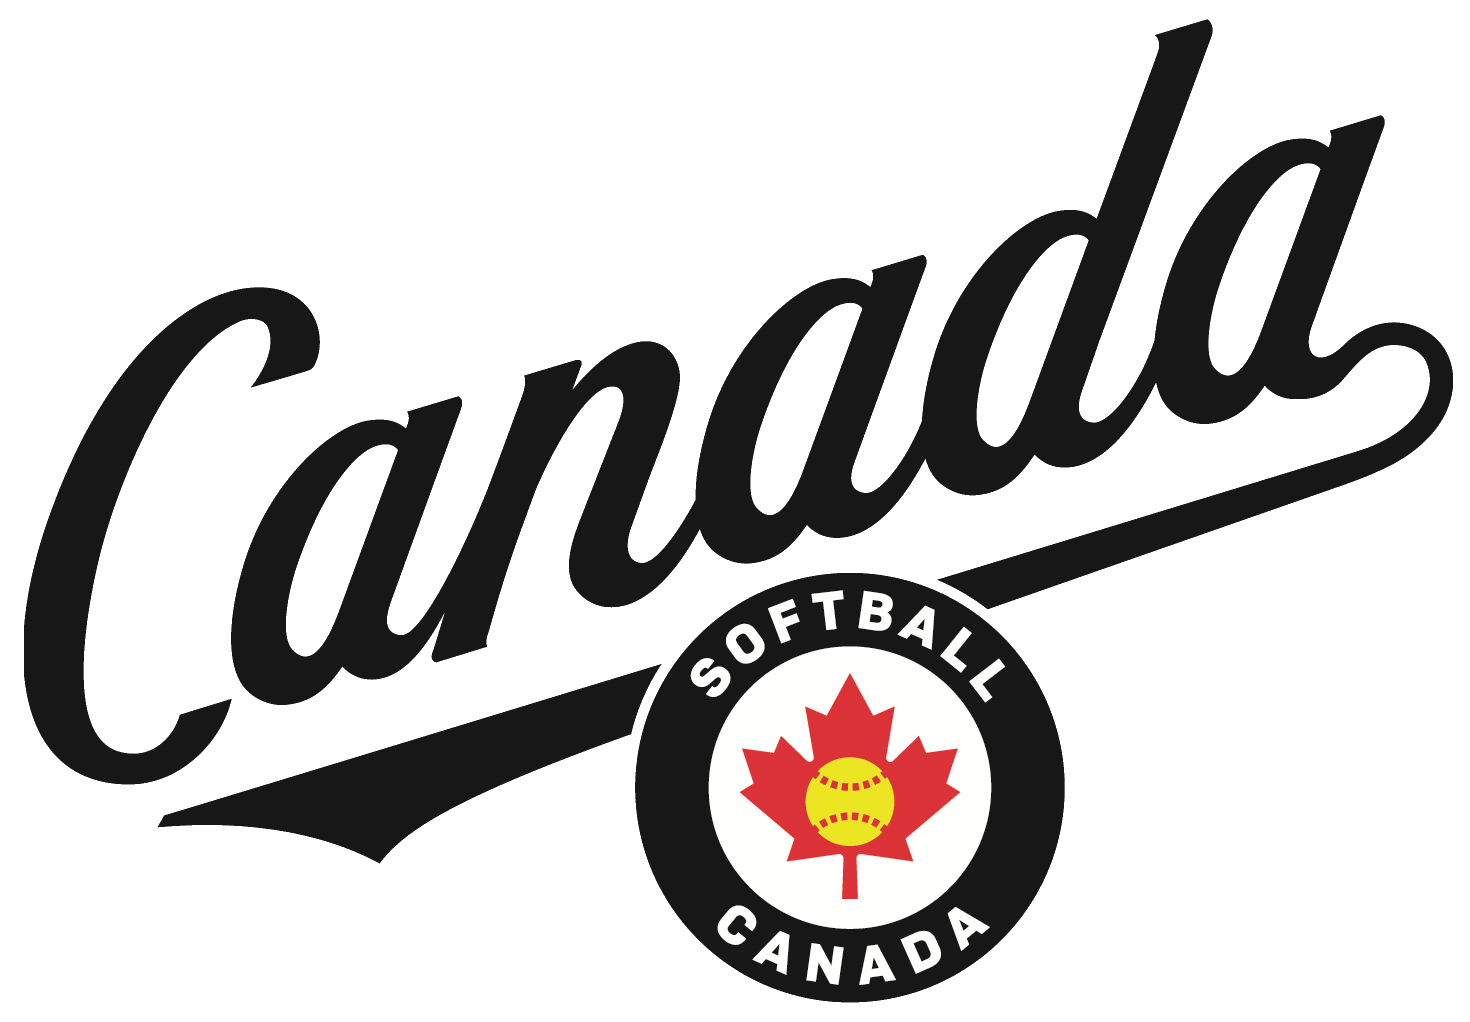 Softball Canada Announces 2021 Men’s National Team Core Players